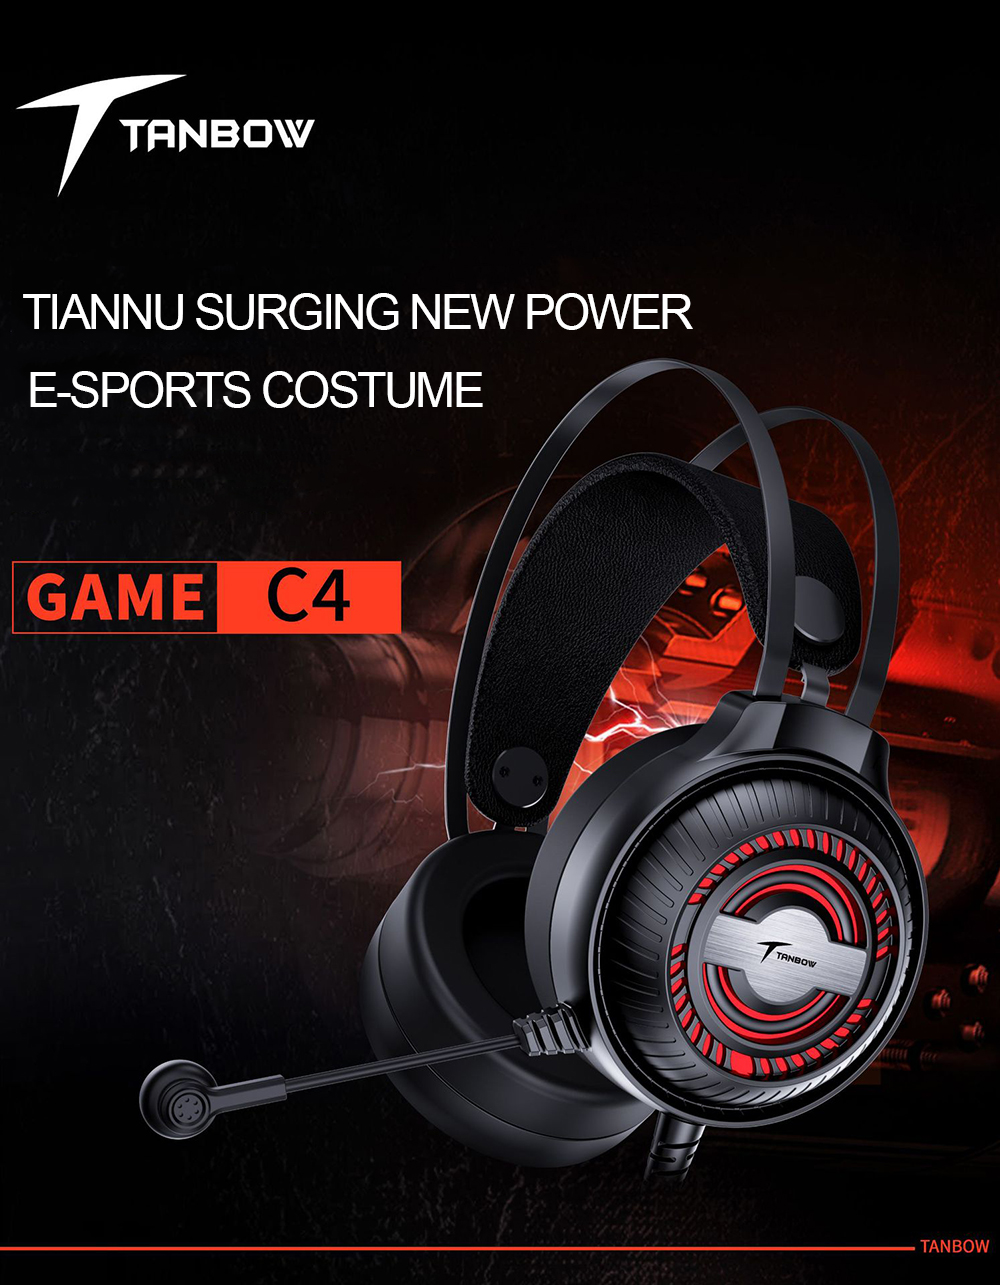 TANBOW-C4-Gaming-Headset-Virtual-71-Channel-50mm-Unit-RGB-Light-USB-Plug-Skin-friendly-and-Breathabl-1802351-1